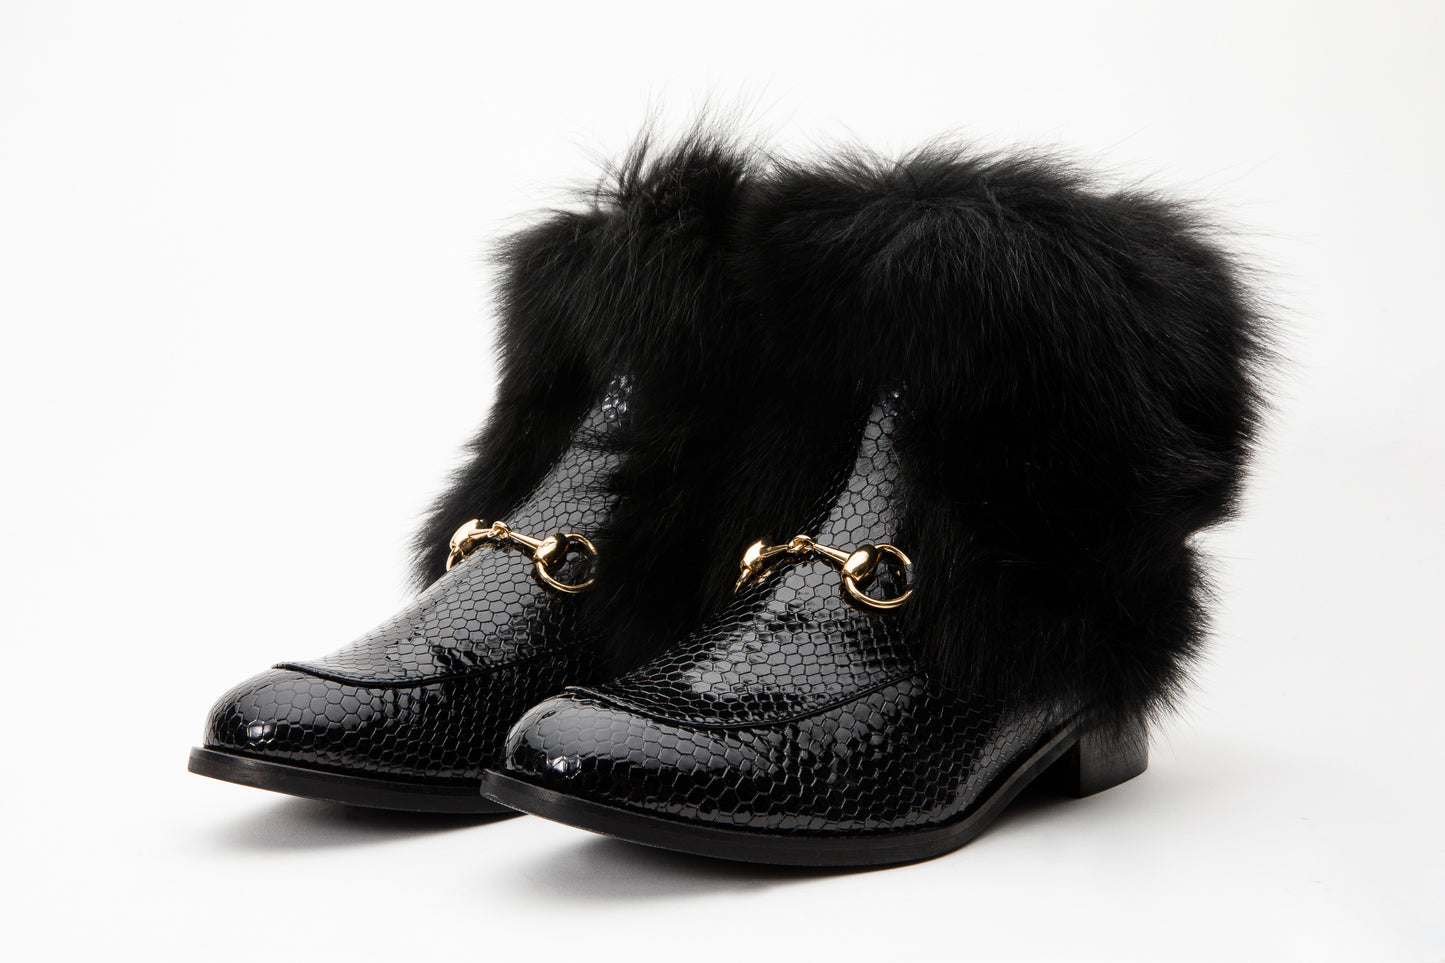 The Izmir Black Patent Leather Natural Fur Mid Calf Women  Boot